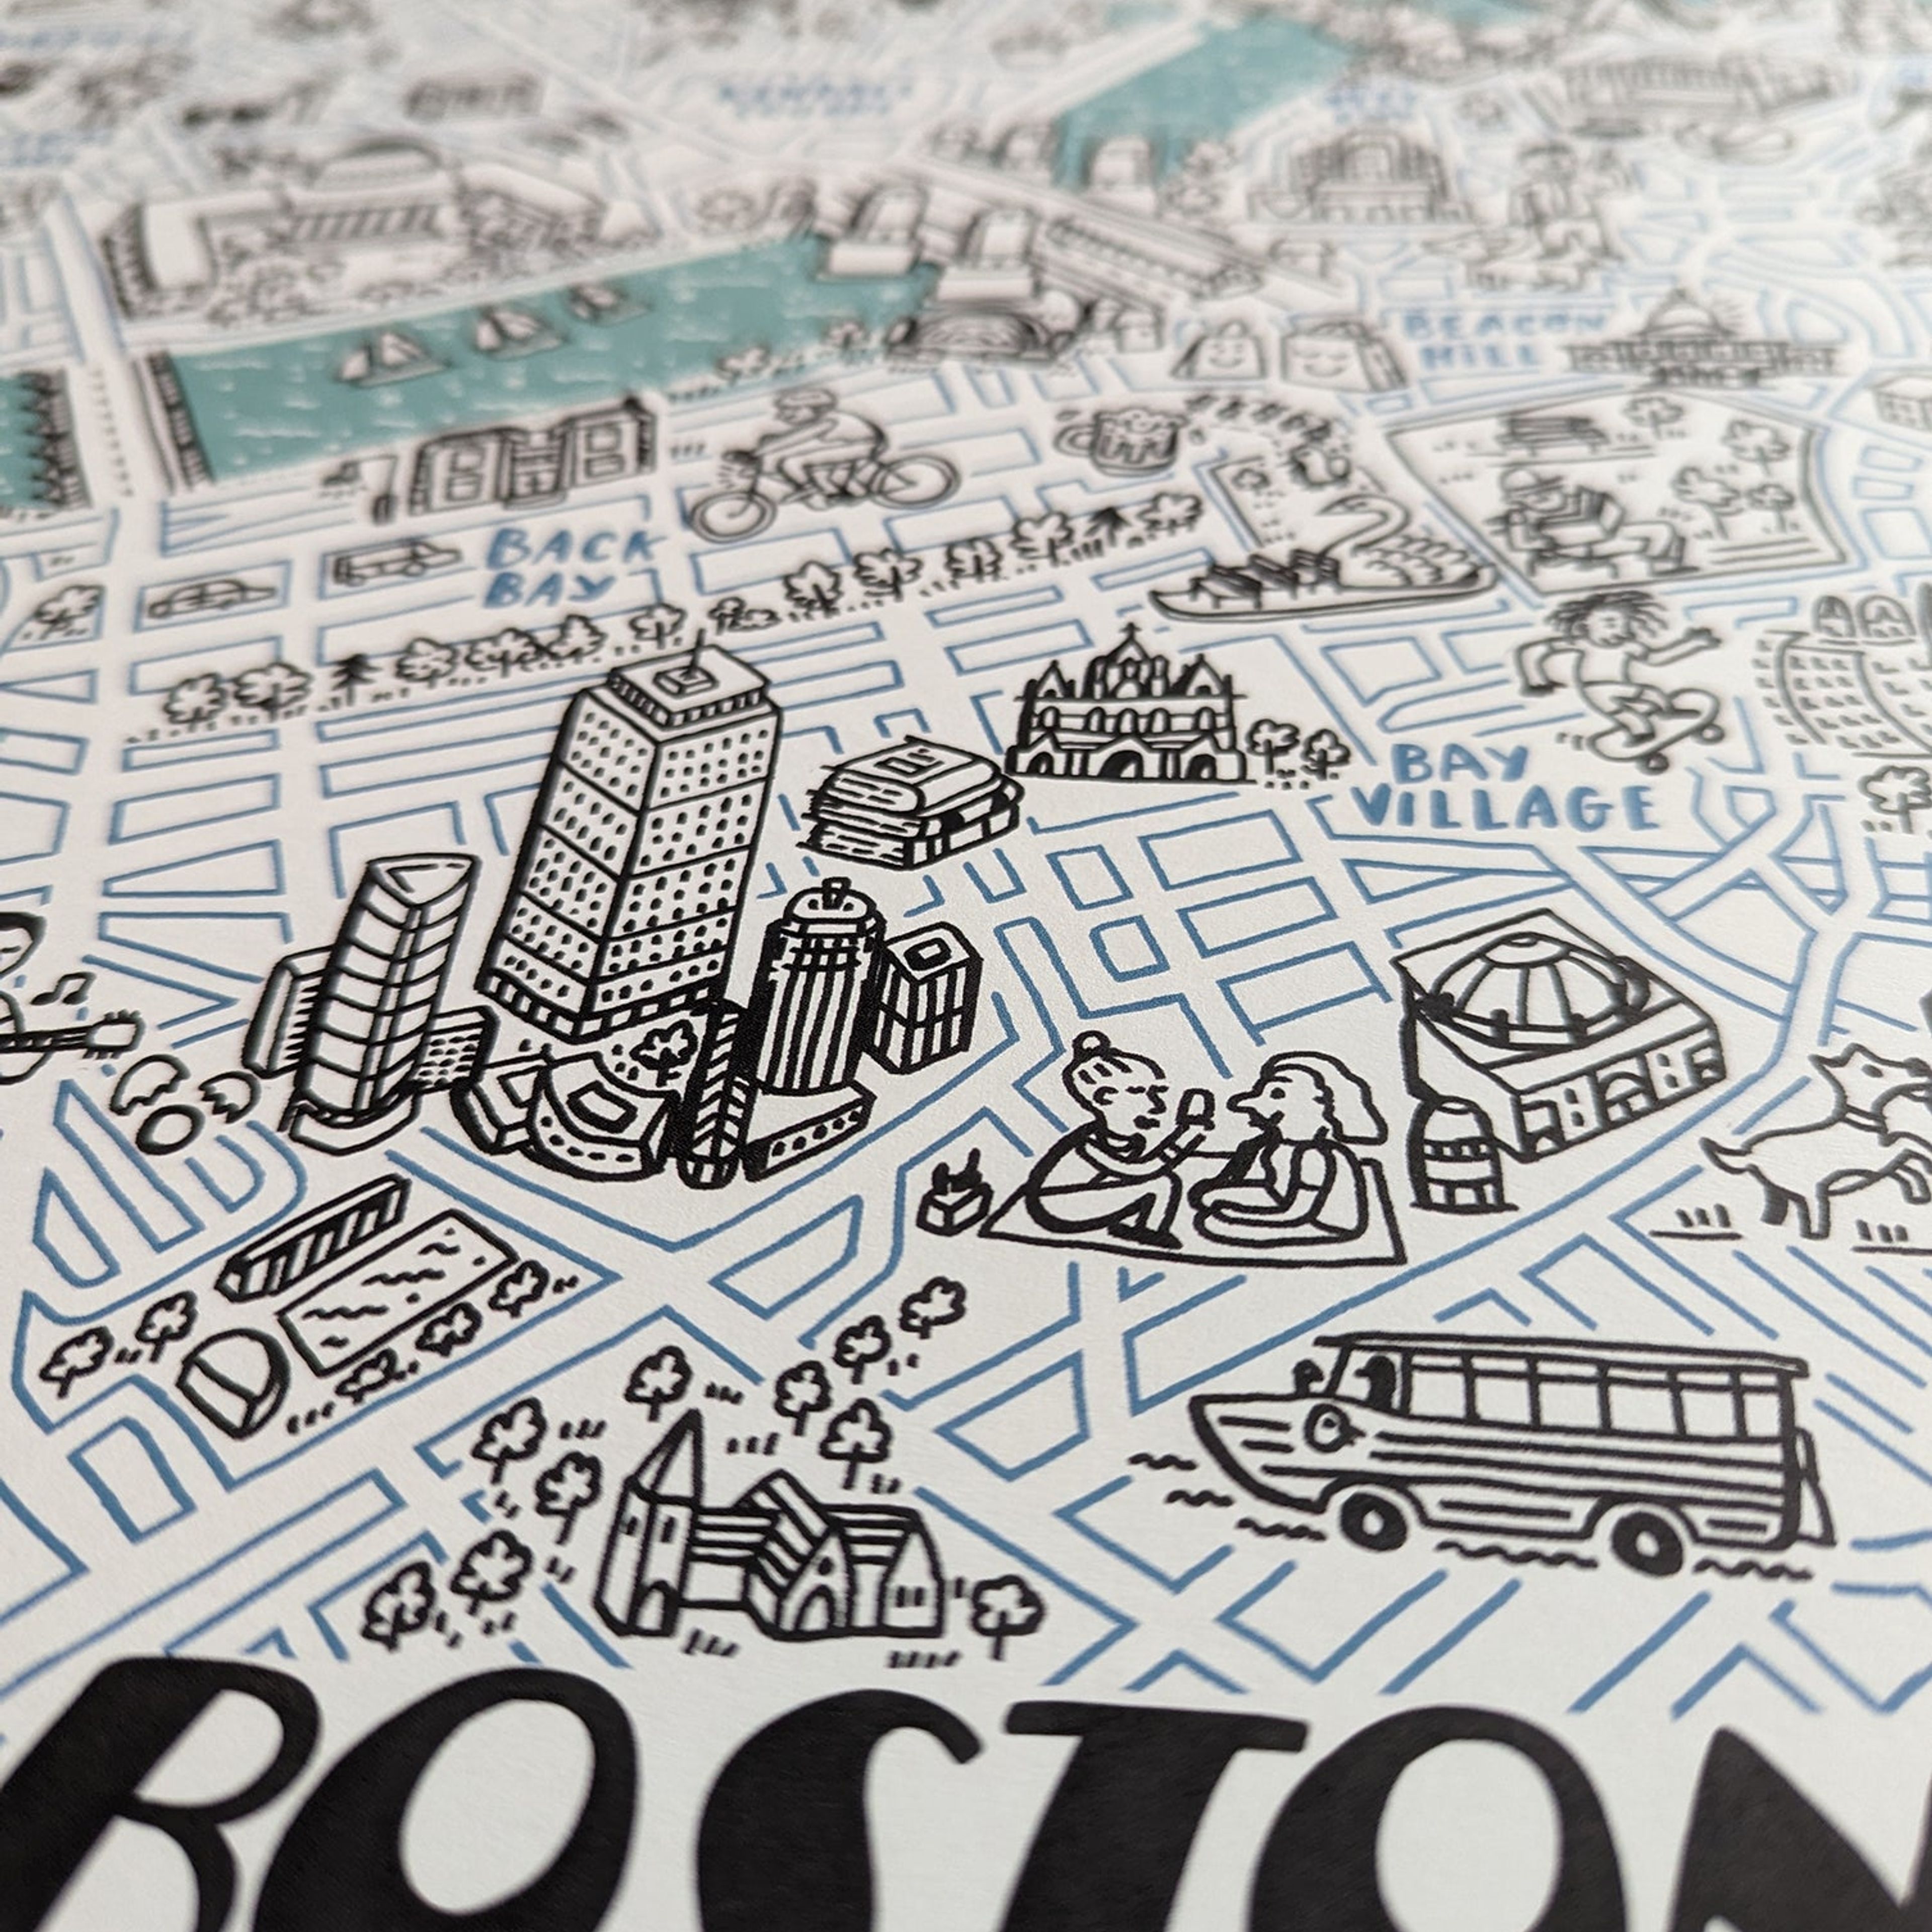 City of Boston Print